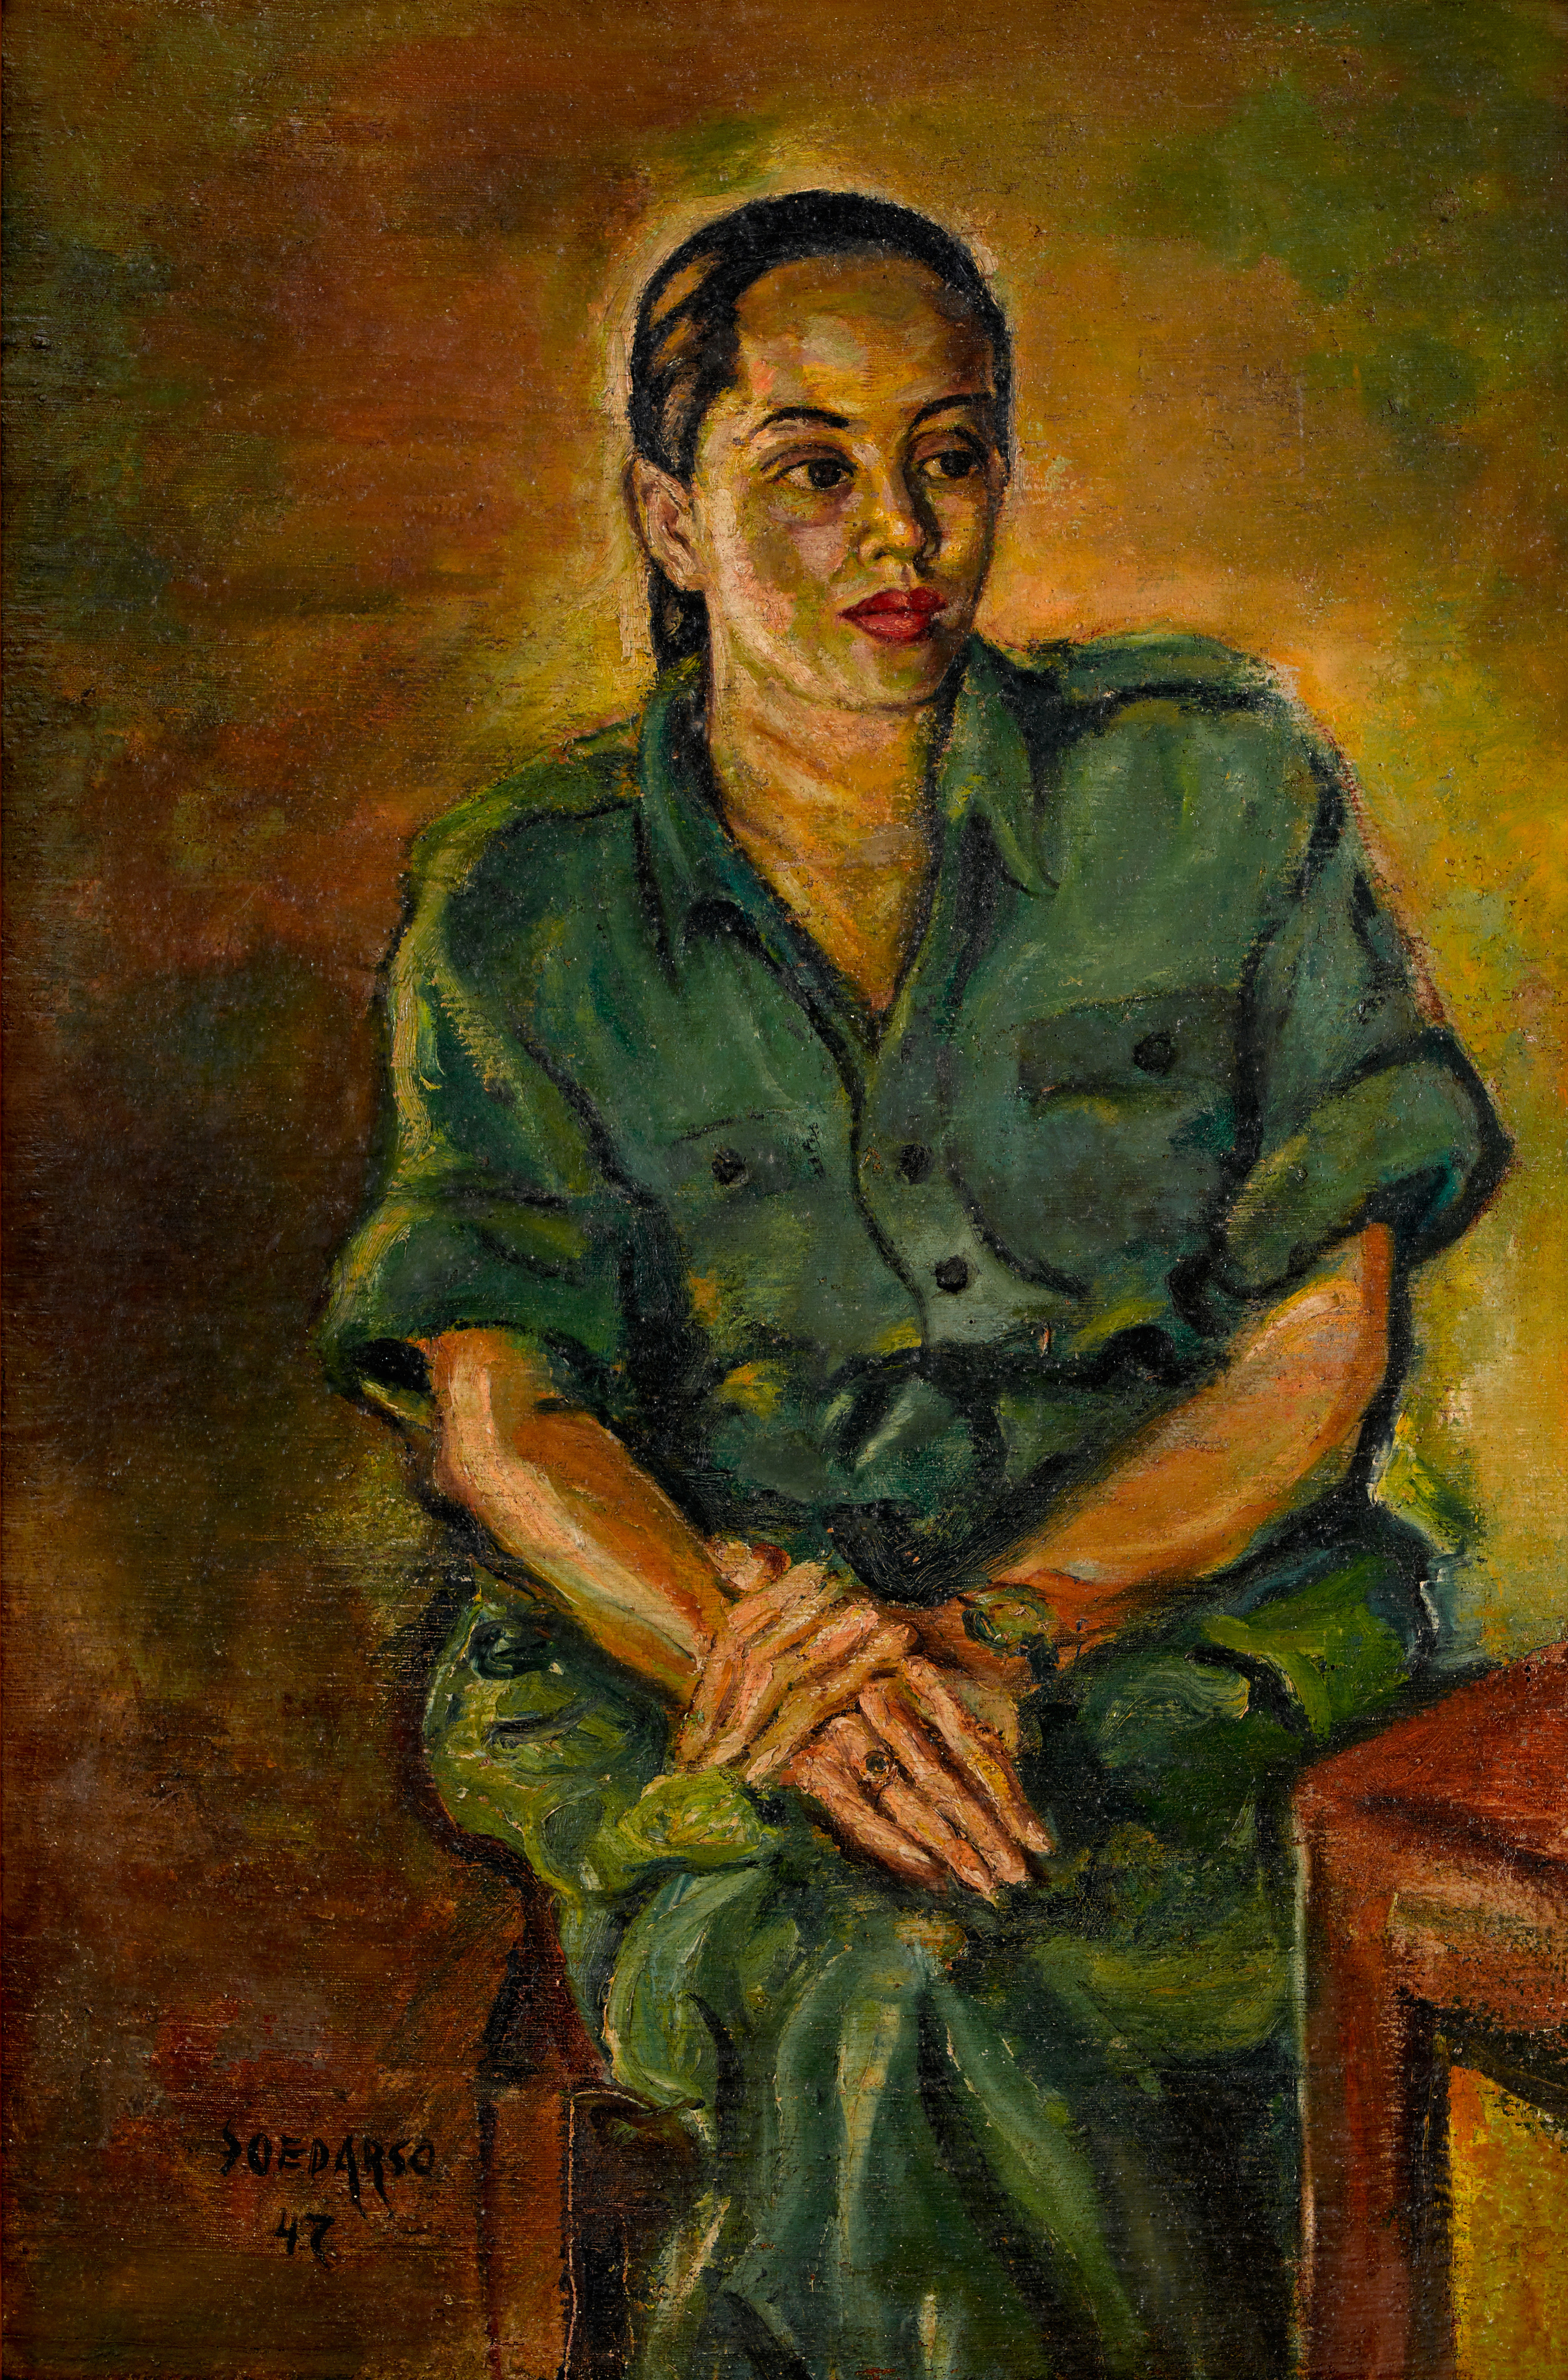 Retrato de Tanja Dezentjé by  Sudarso - 1947 - 100 x 68 cm Rijksmuseum